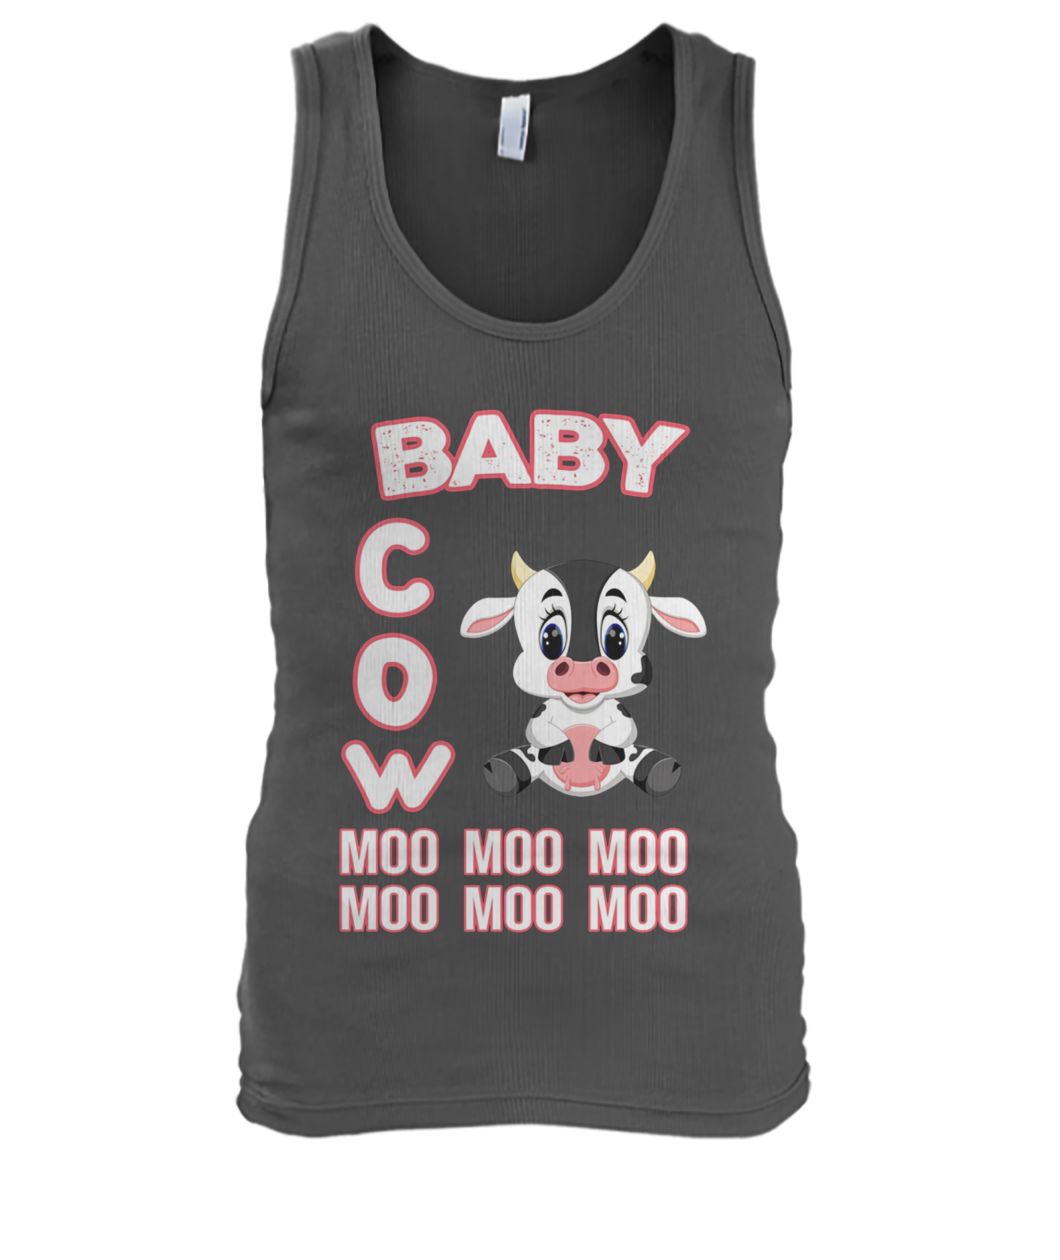 Baby cow moo moo moo men's tank top